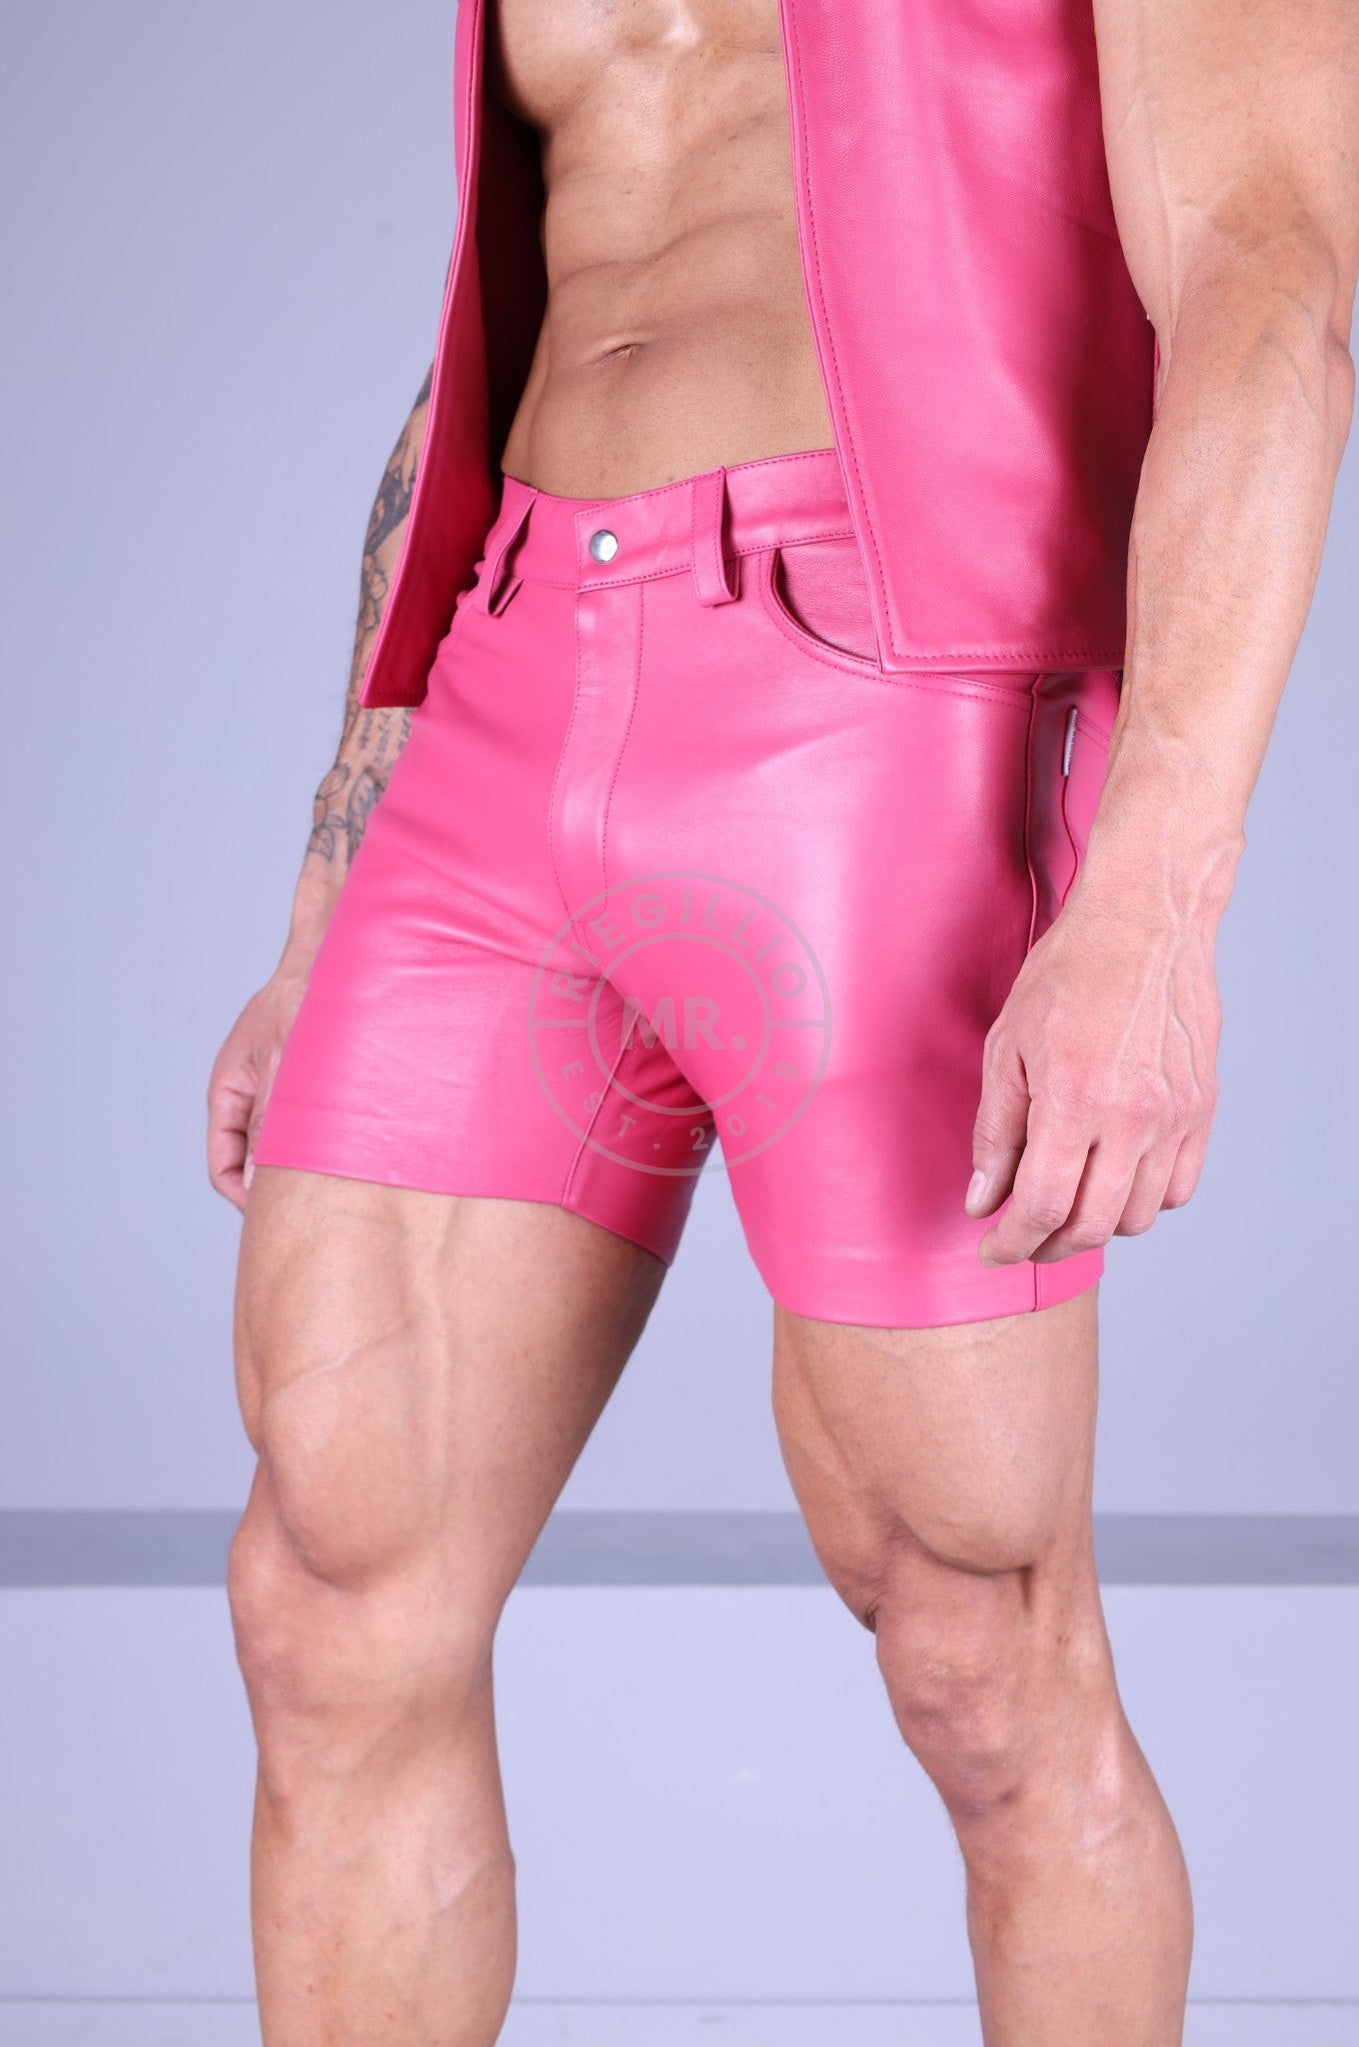 Leather 5 Pocket Short - Pink at MR. Riegillio